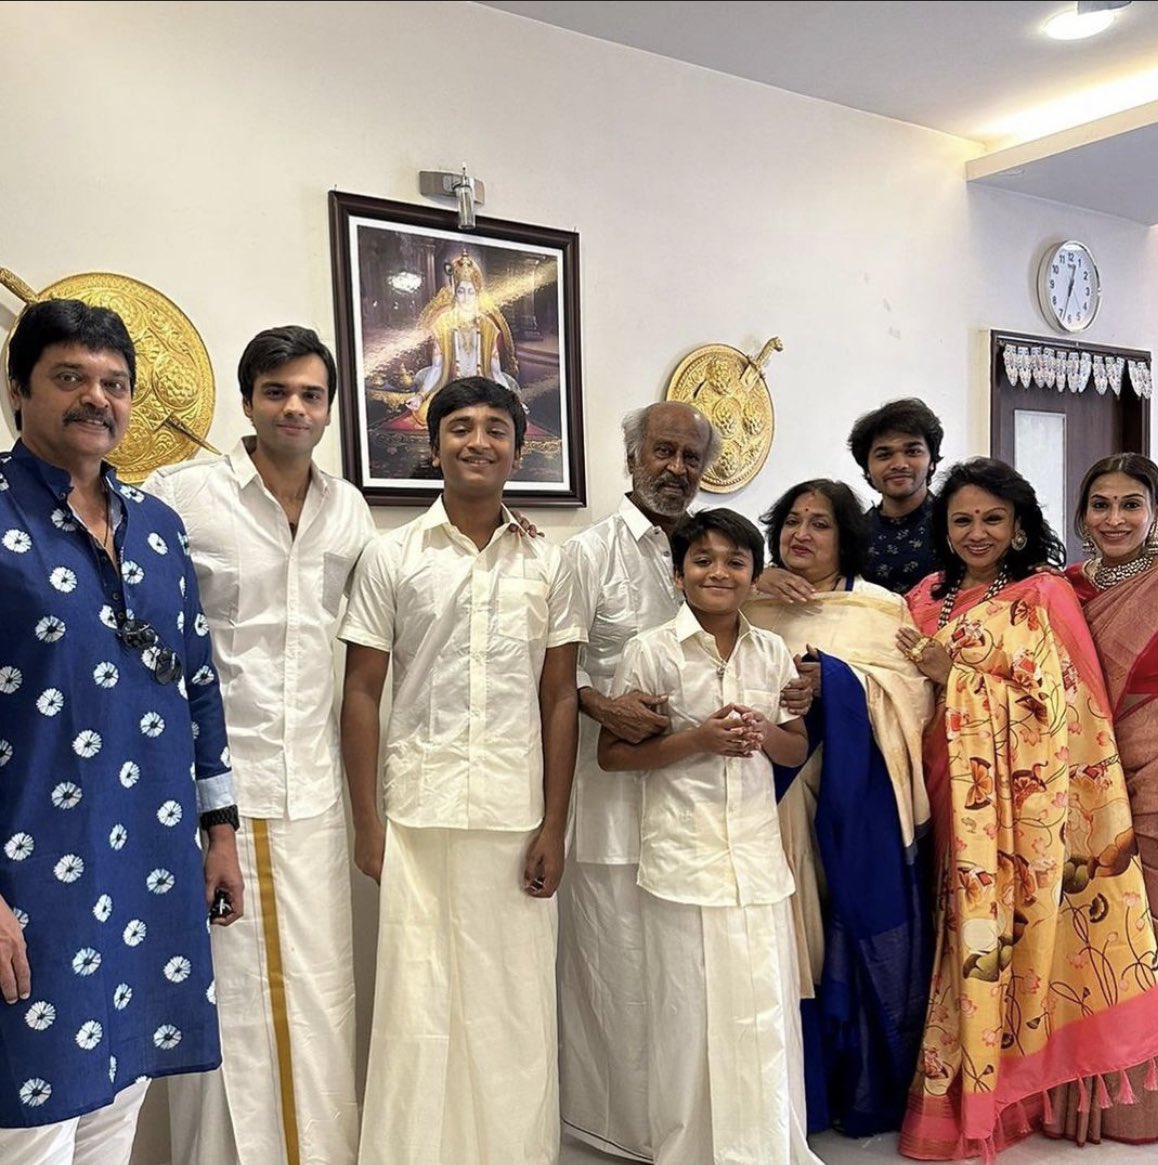 #Thalaivar @rajinikanth and family members celebrate Diwali at home. @ash_rajinikanth #yatra #linga @hrishikeshkk #superstar